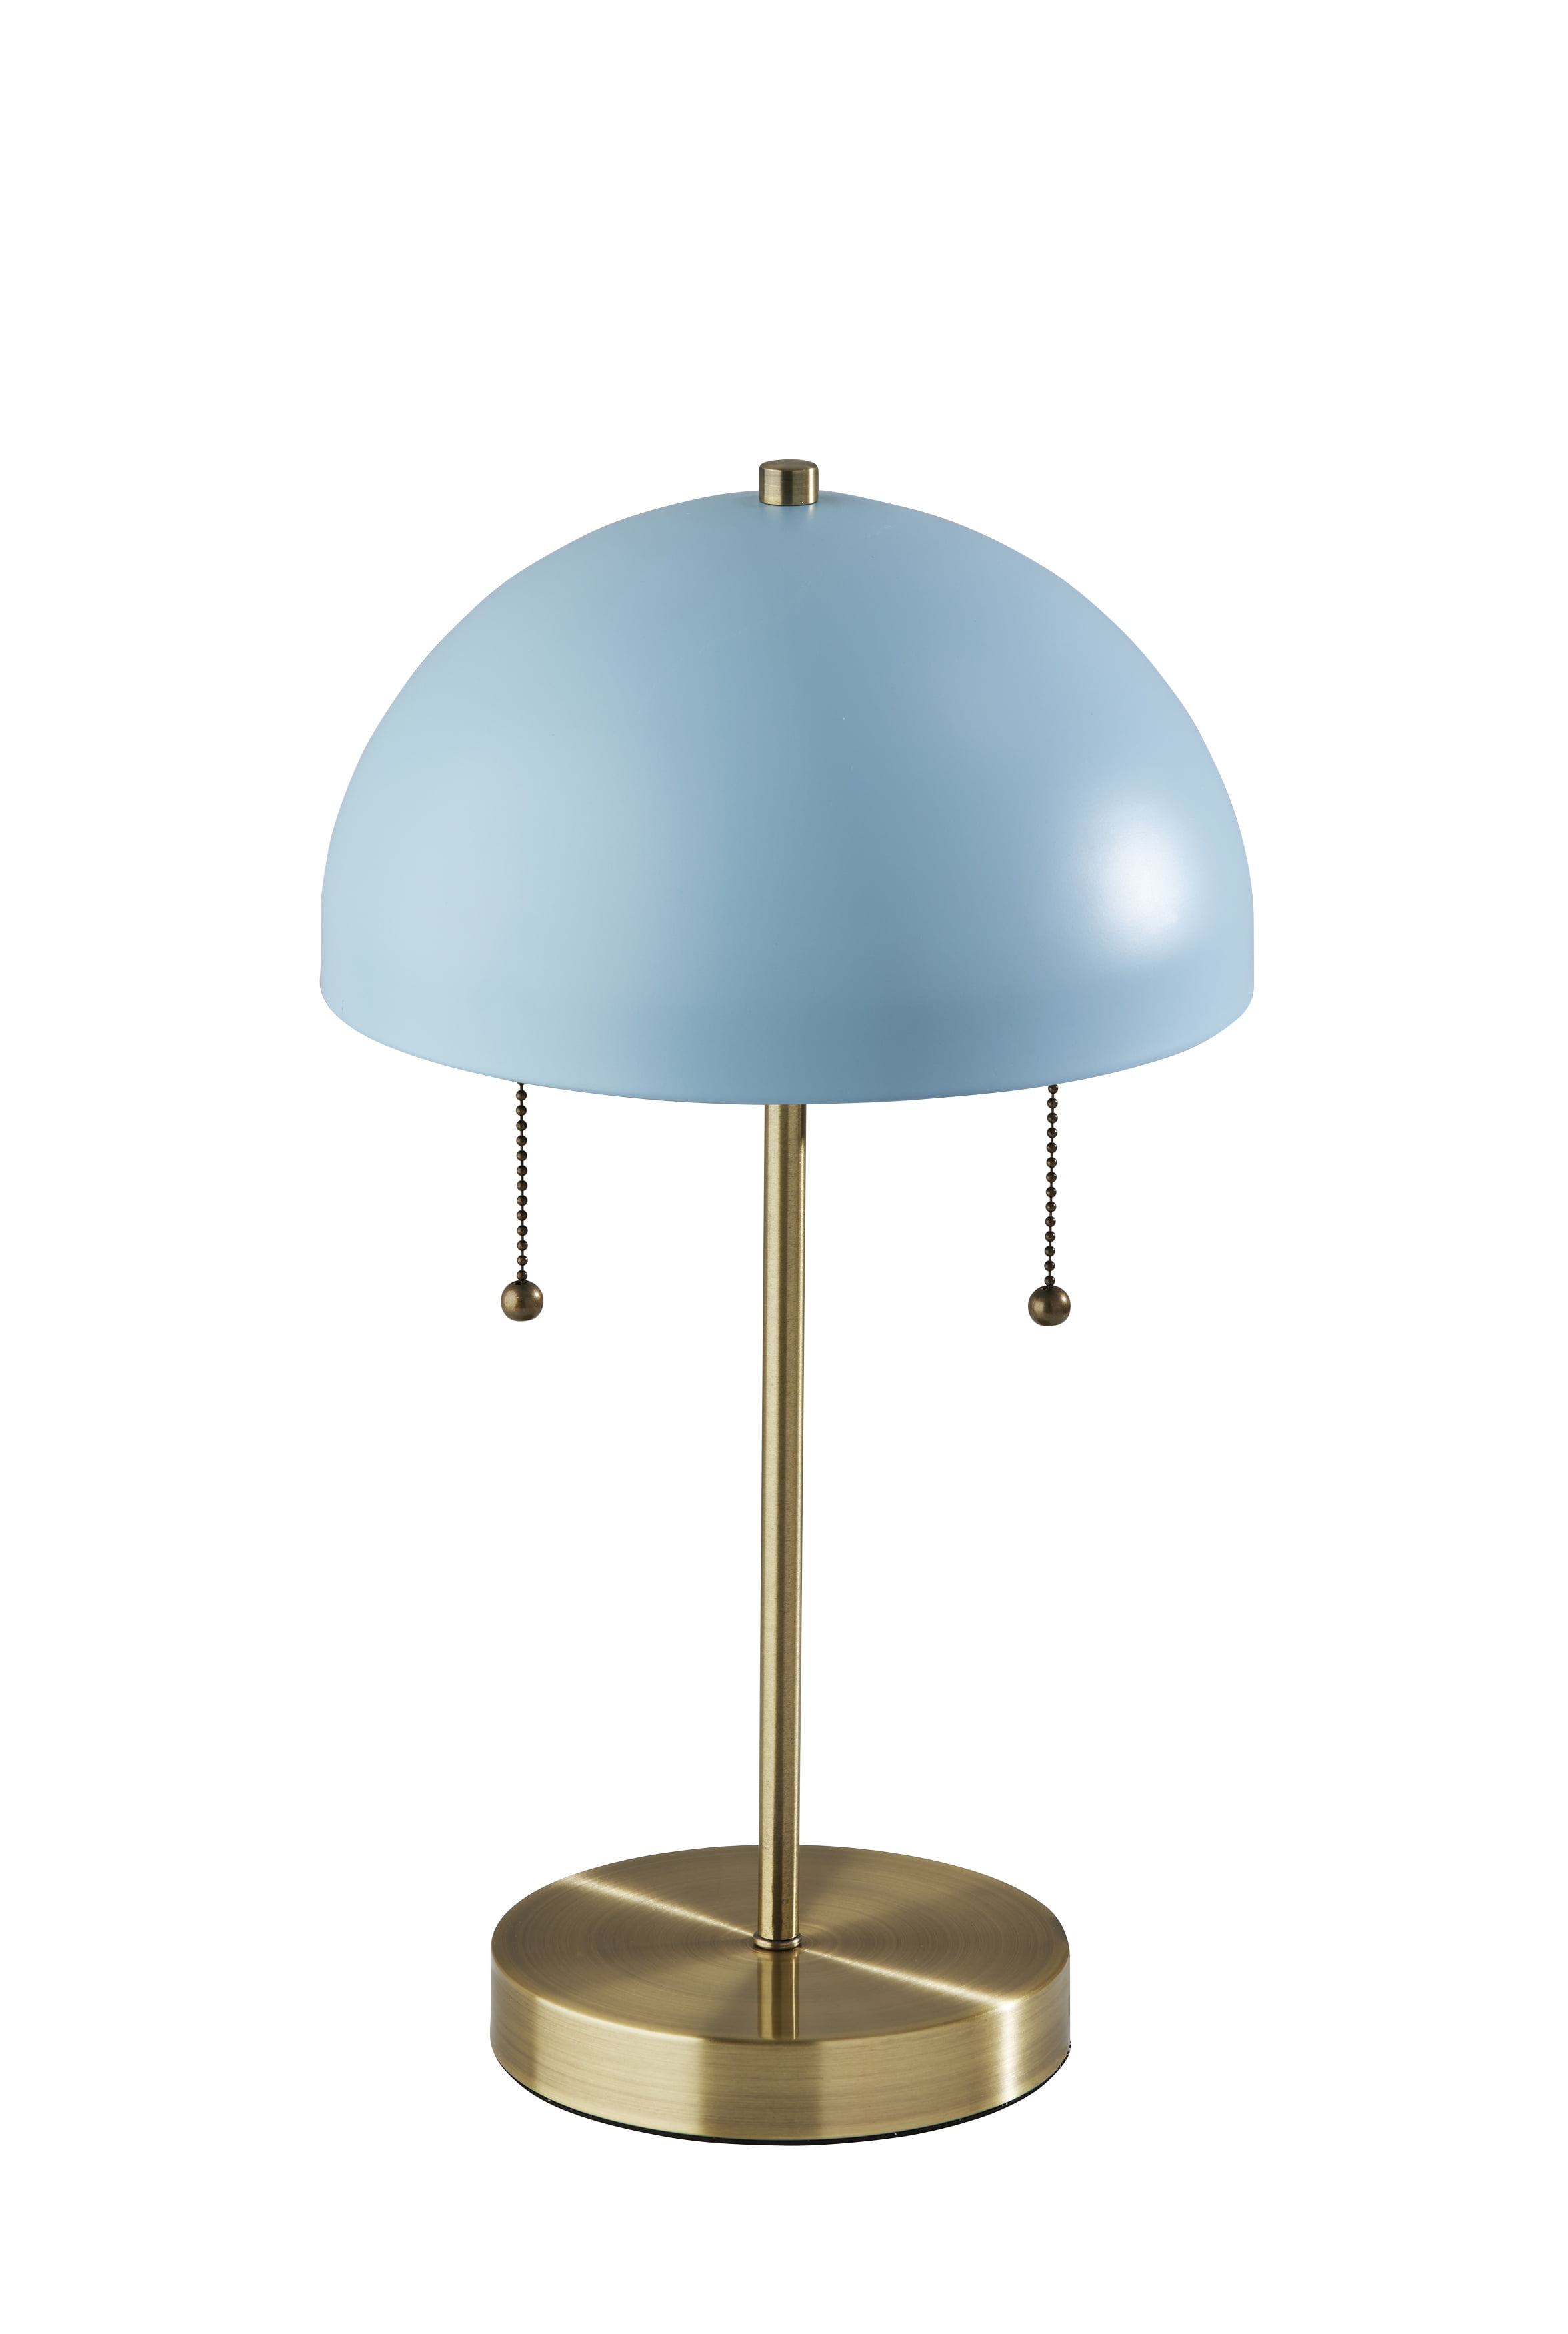 Artiva USA Geometric 29-inch Contemporary Chrome & Black Contrast Table Lamp 